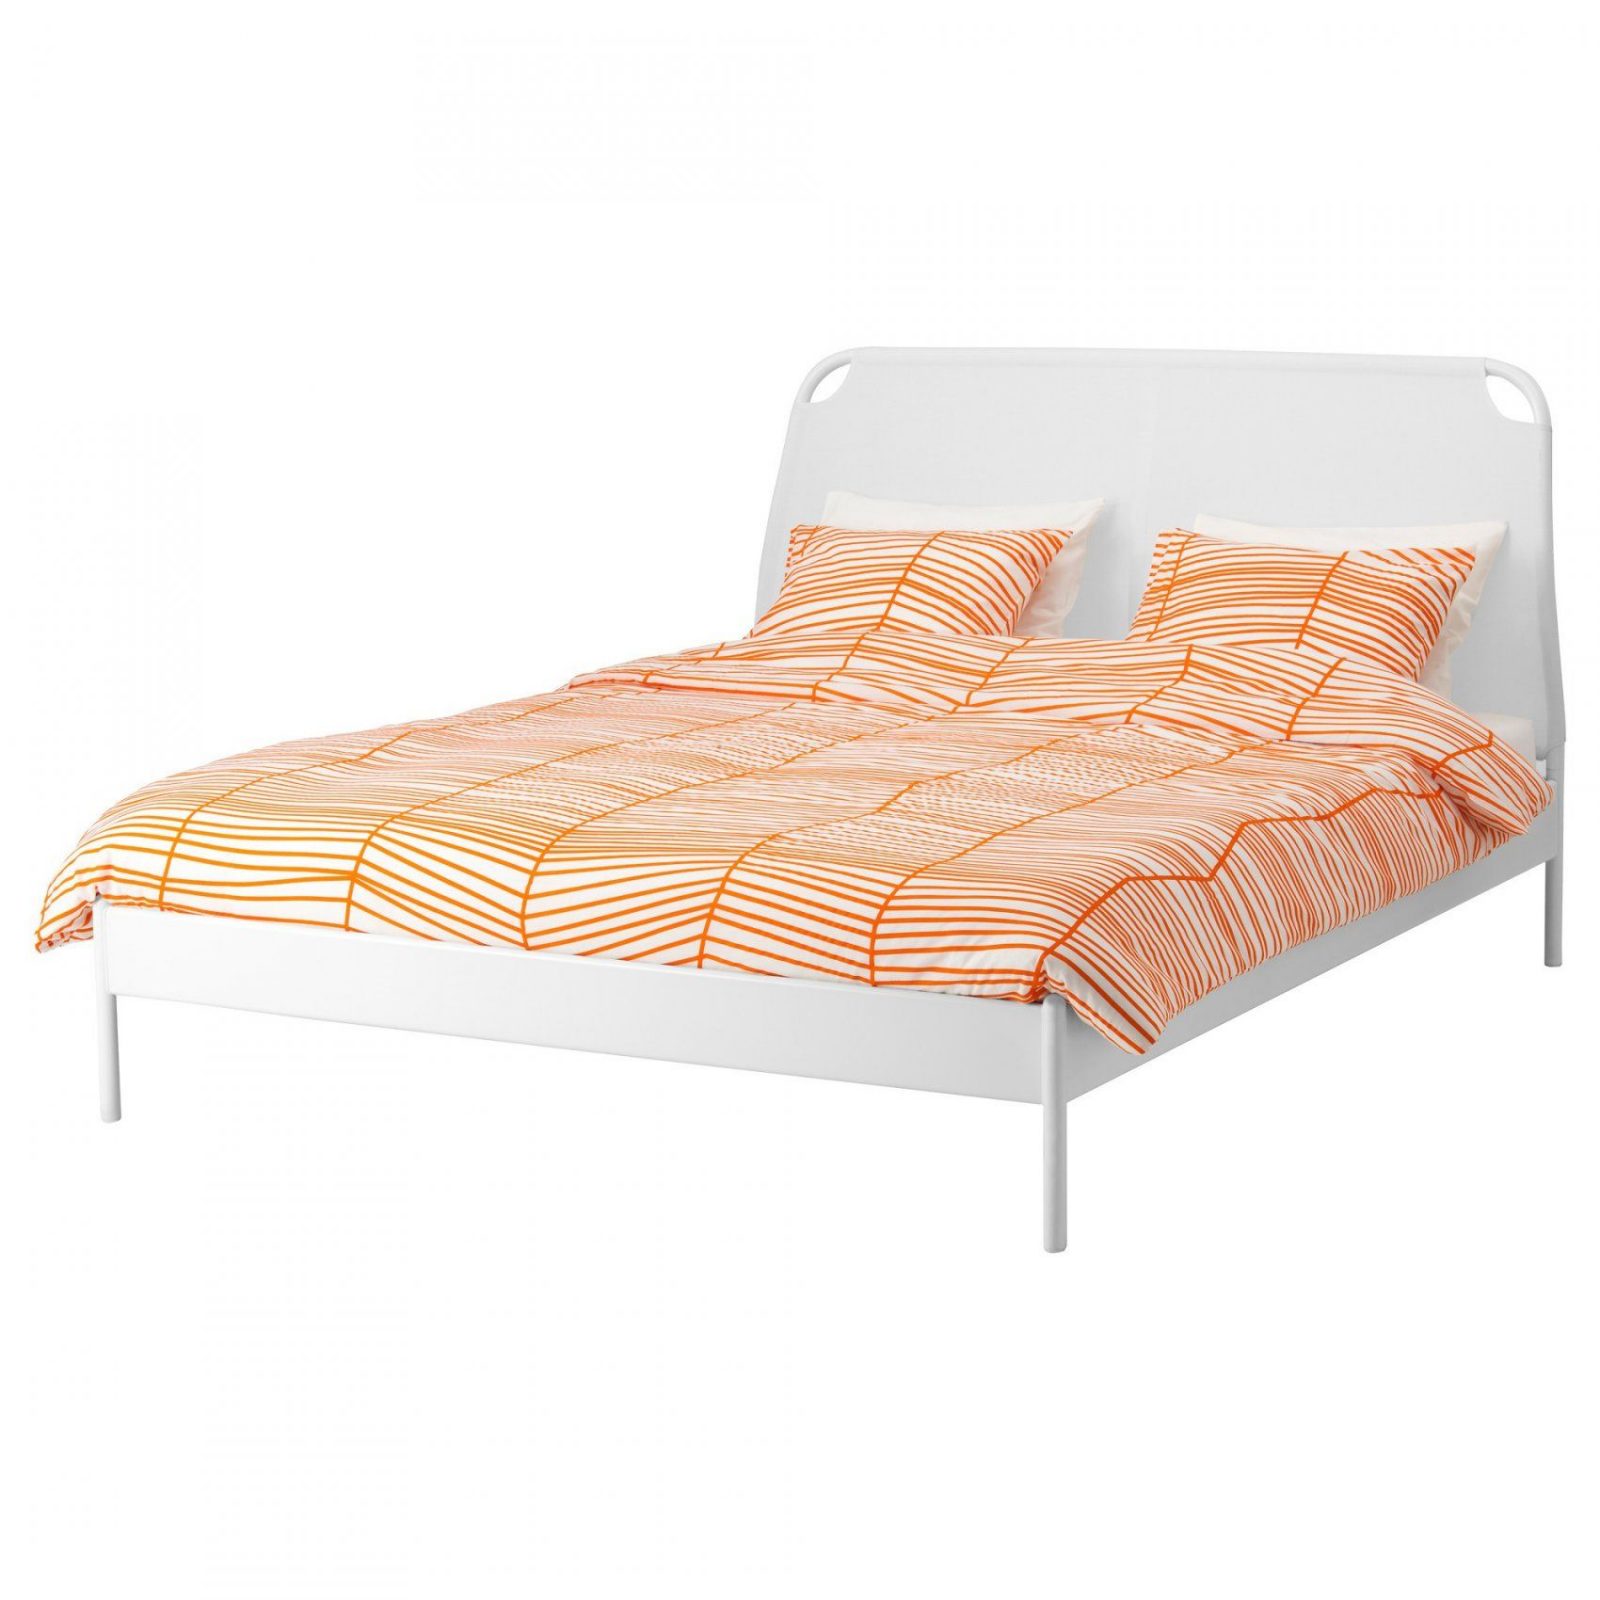 Elegant Ikea Malm Bett 140×200 Mit Double King Size Beds Bed Frames von Ikea Malm Bett 90X200 Photo